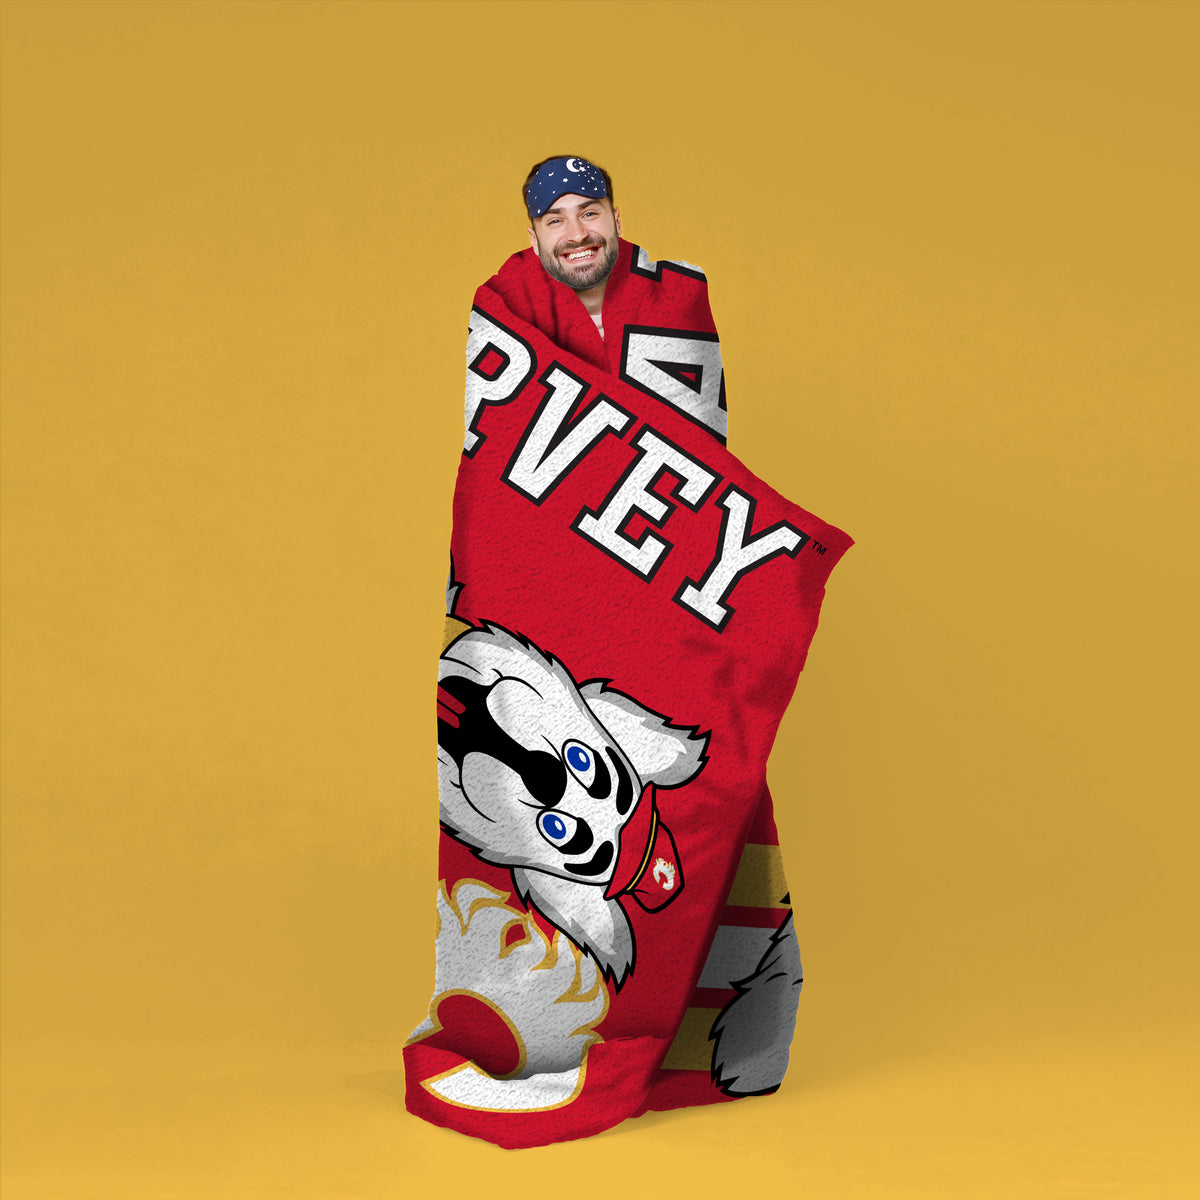 Calgary Flames Harvey the Hound Mascot 60” x 80” Raschel Plush Blanket